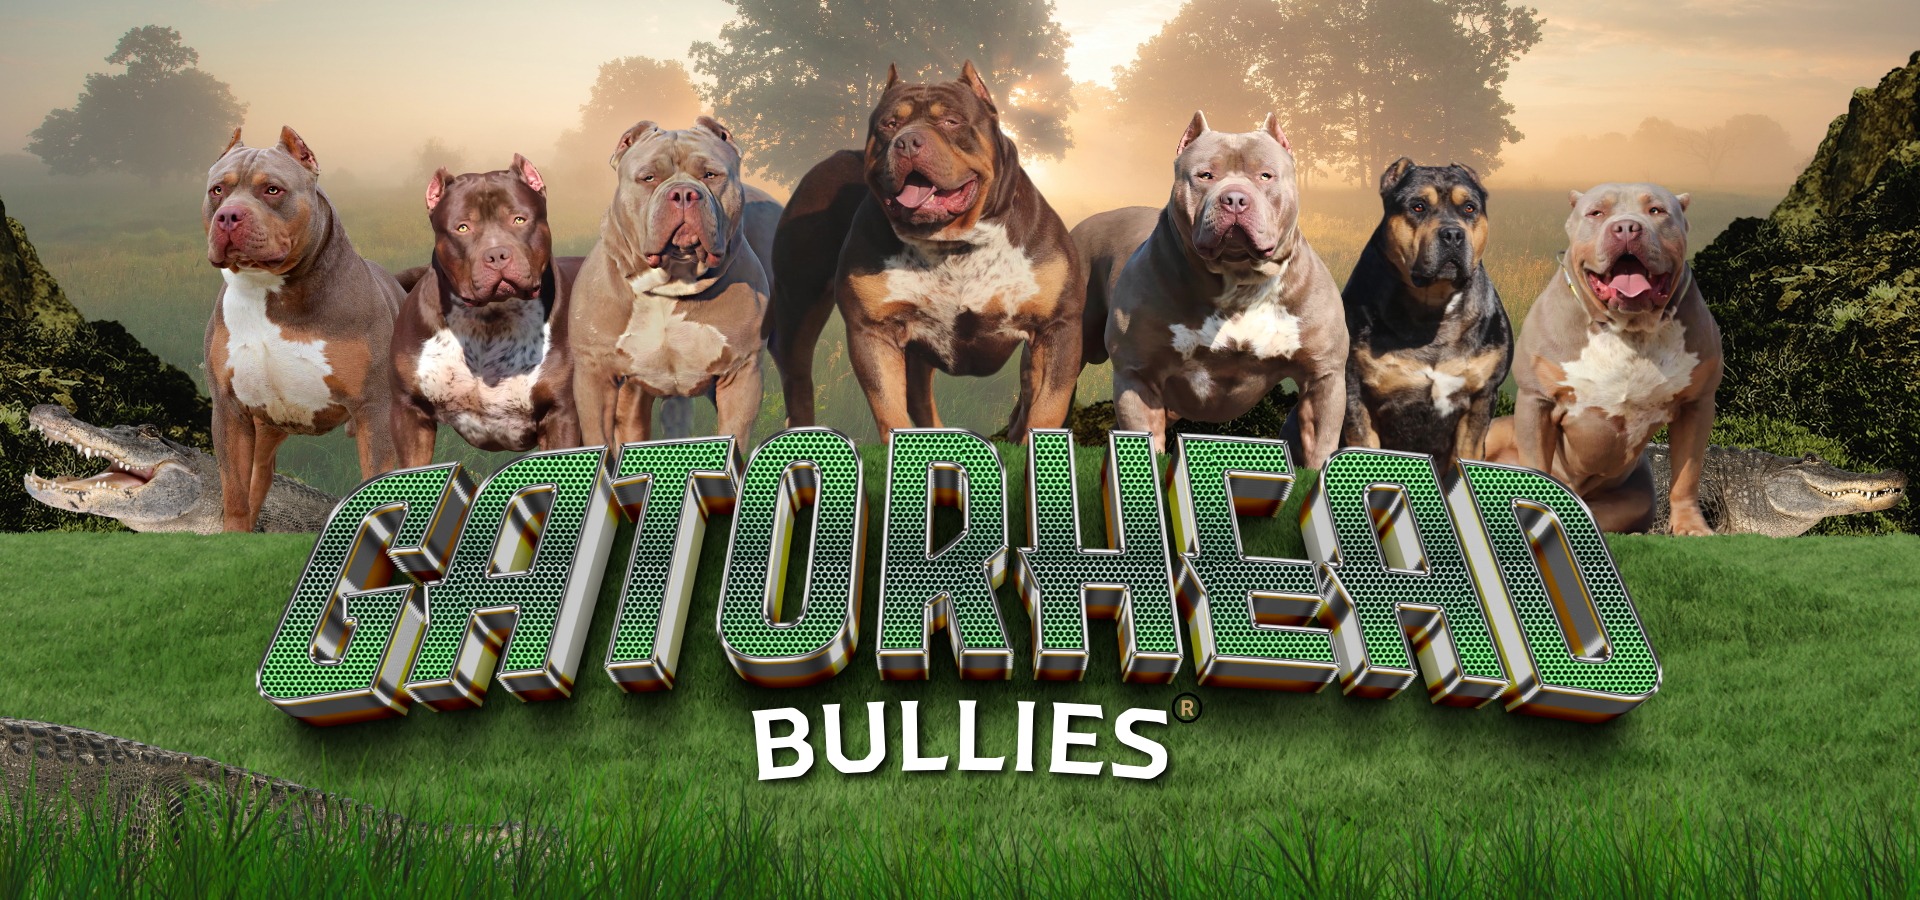 Gatorhead Bullies XL American Bullies for sale - top American Bully breeders - GHB - the home of GHB Whopper - the home of Allstar Bullies Chop (2)